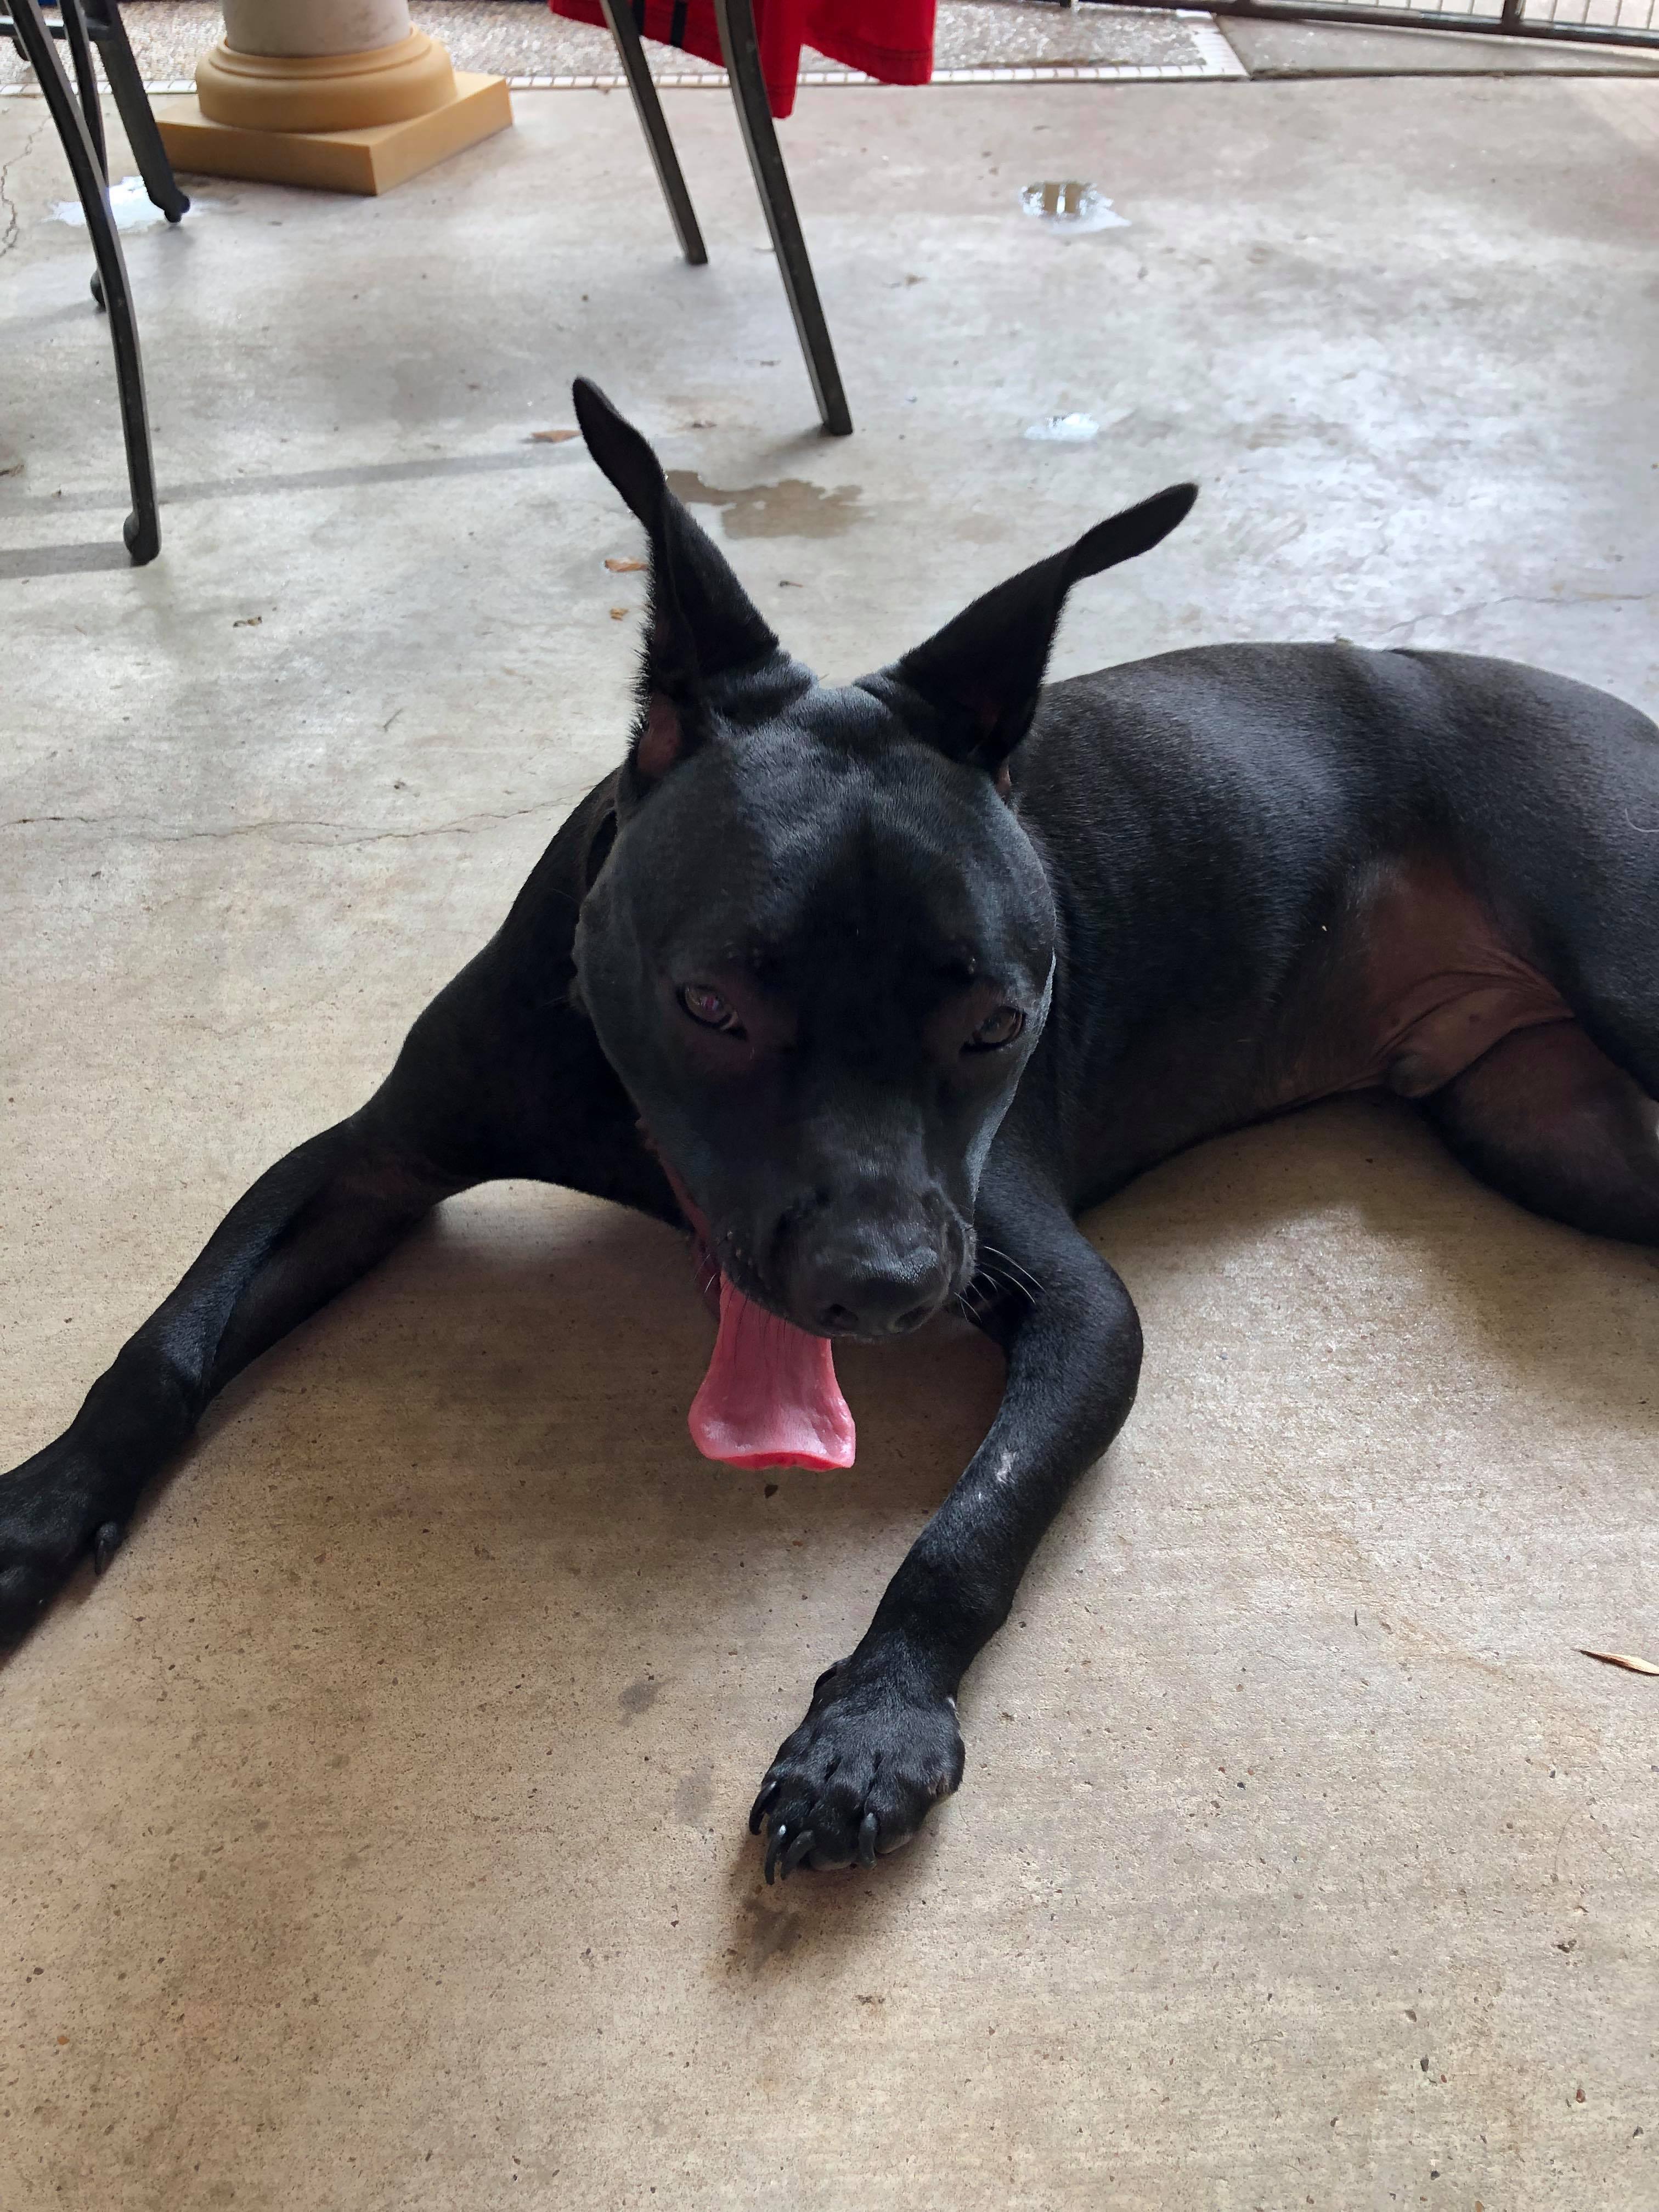 SAMSON, an adoptable Pit Bull Terrier in Orange, TX, 77632 | Photo Image 2